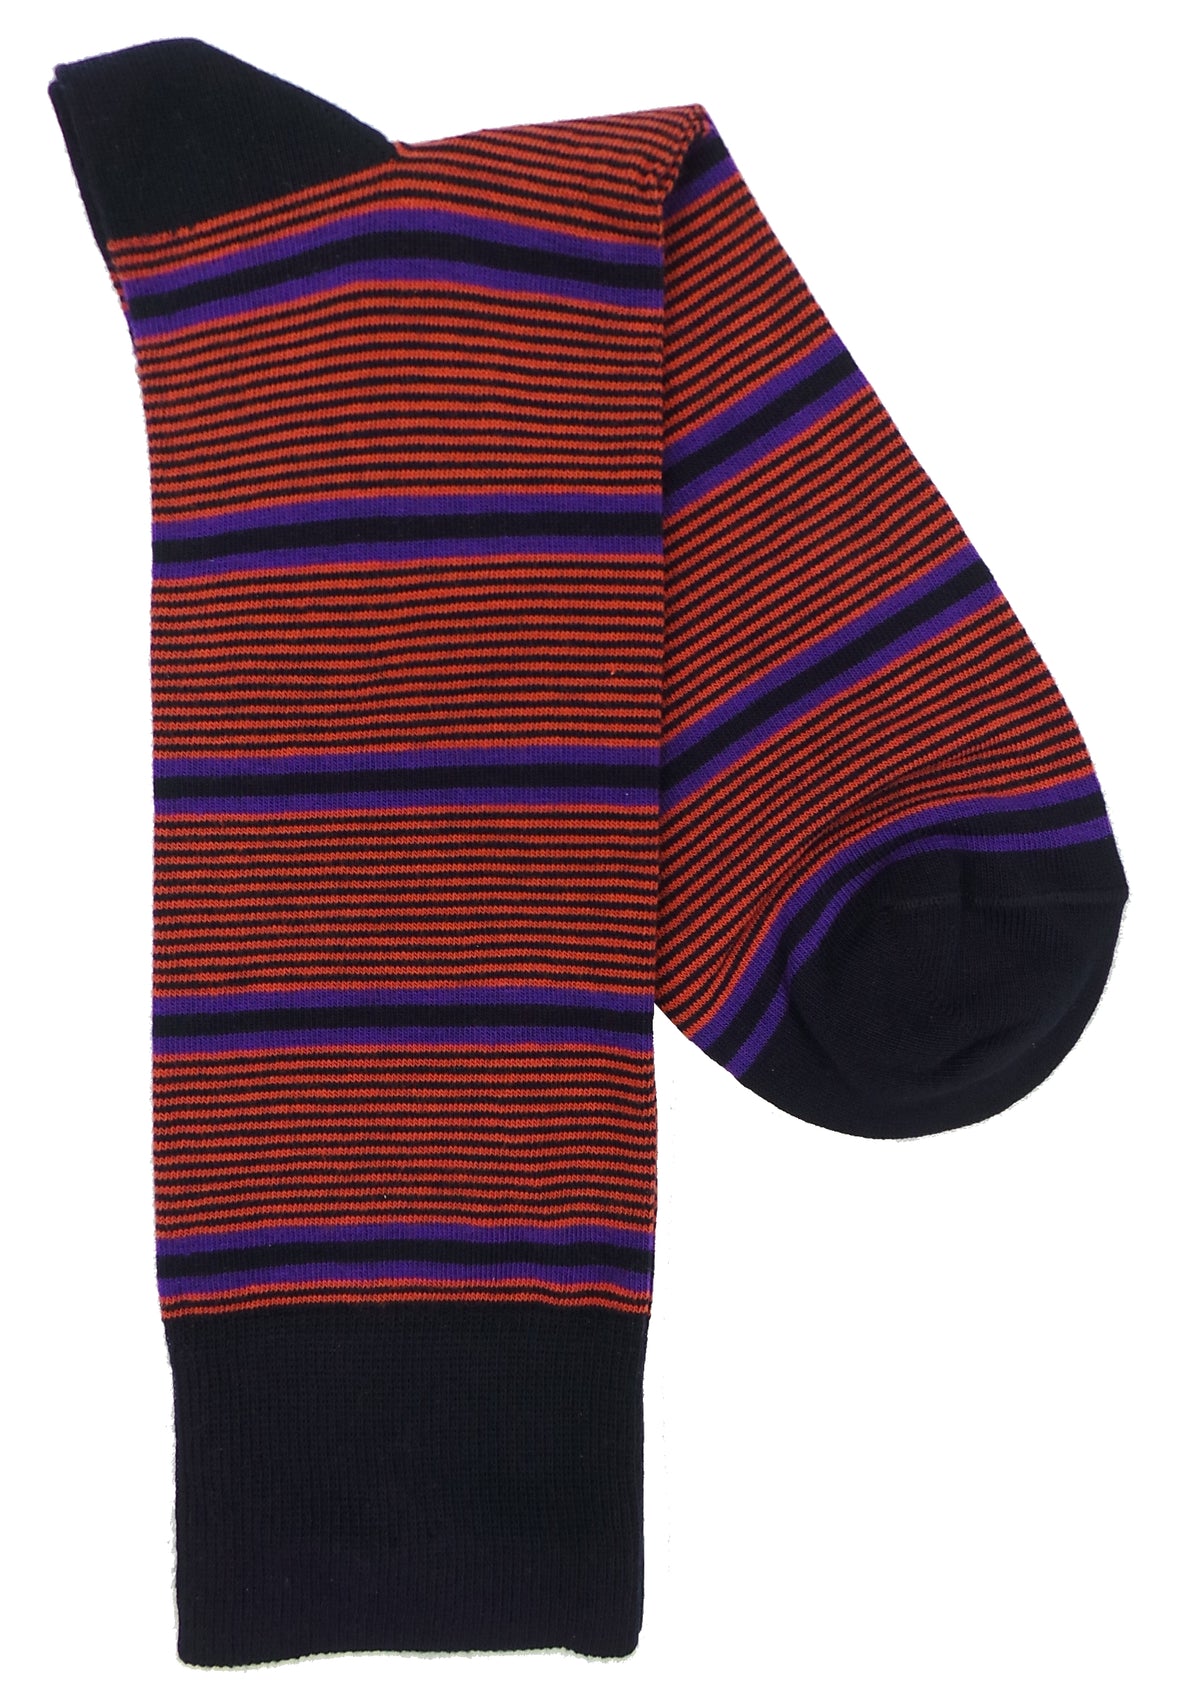 Lorenzo Uomo Mixed Stripe Cotton Blend Socks